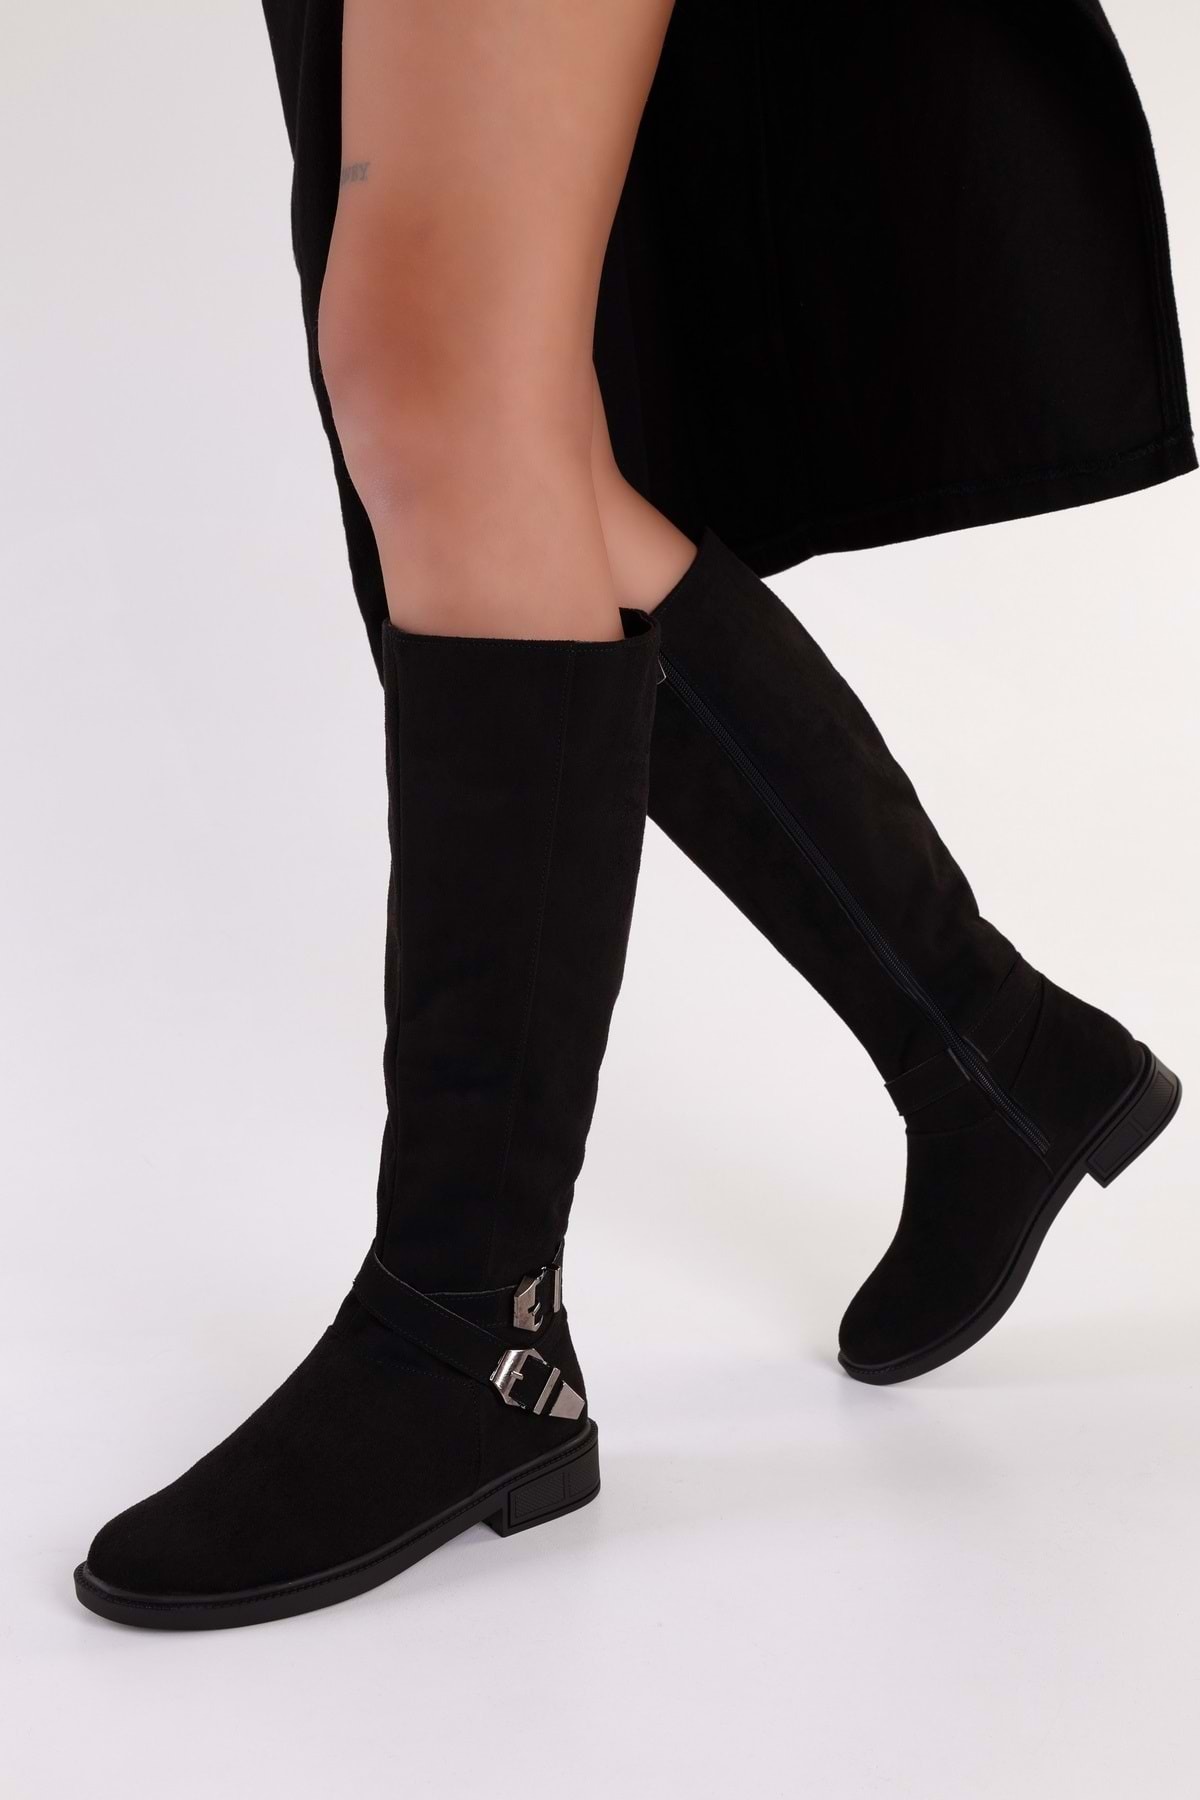 Levně Shoeberry Women's Steele Black Suede Buckle Flat Heel Boots Black Suede